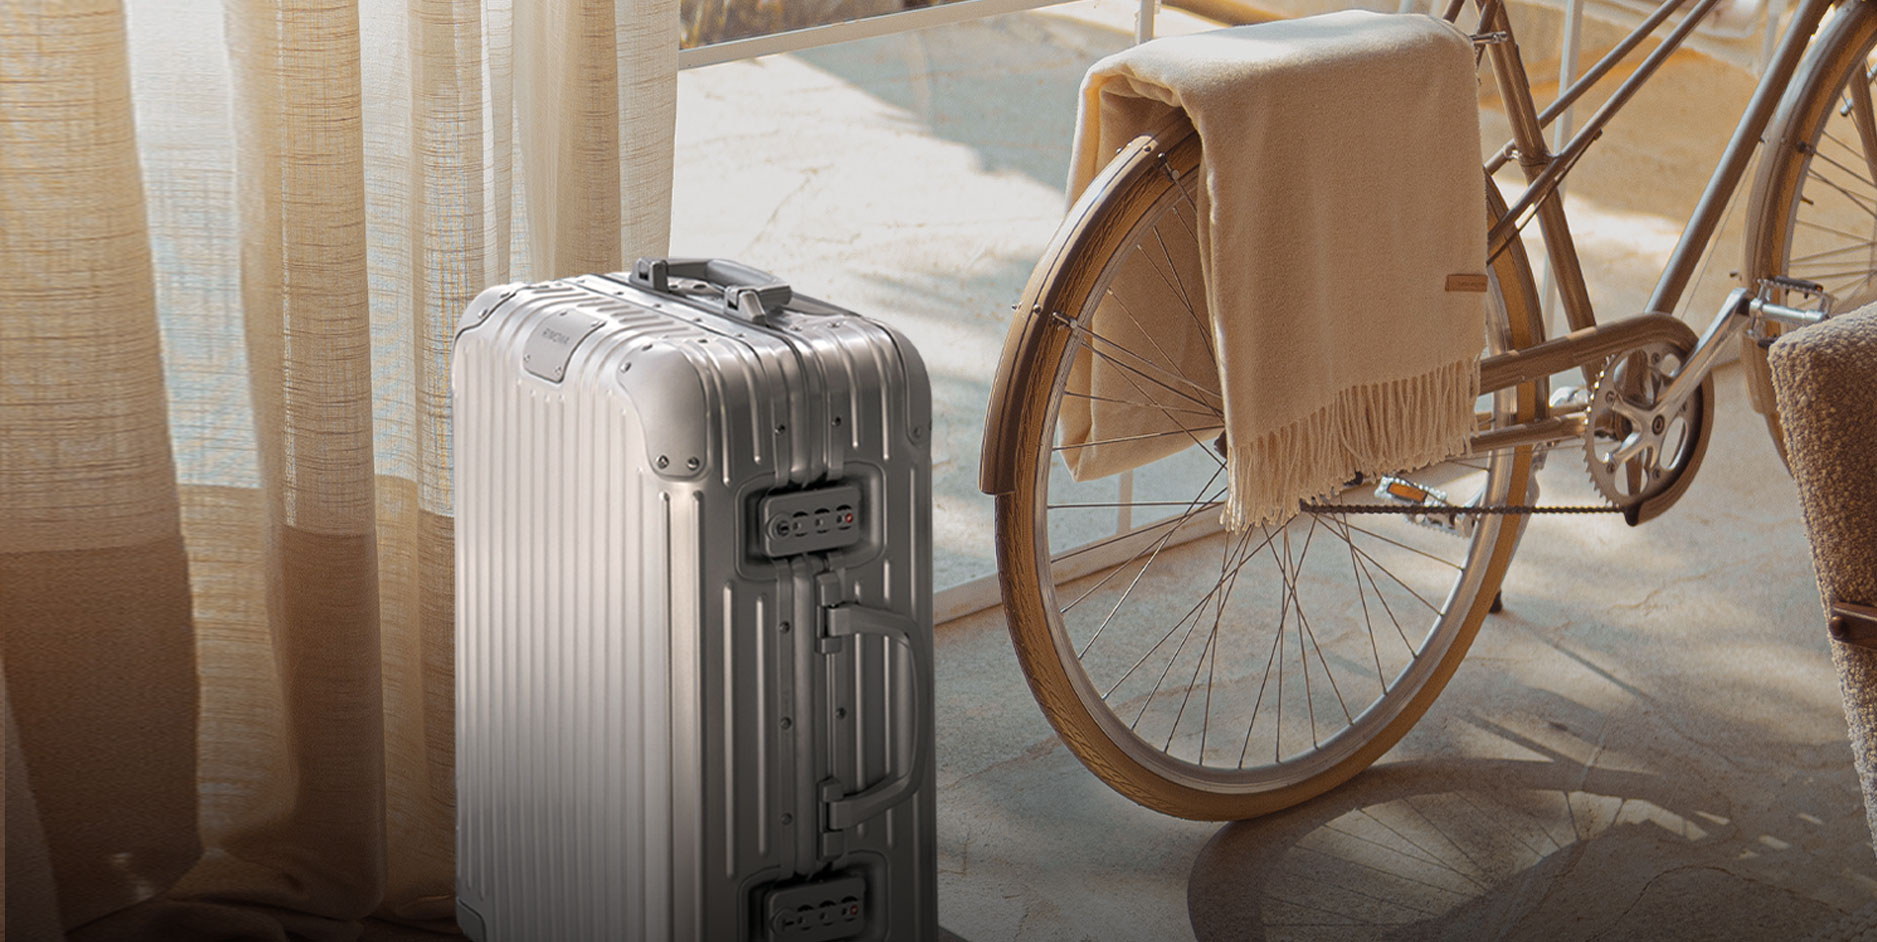 RIMOWA Celebrates its Iconic Classic Cabin Suitcase